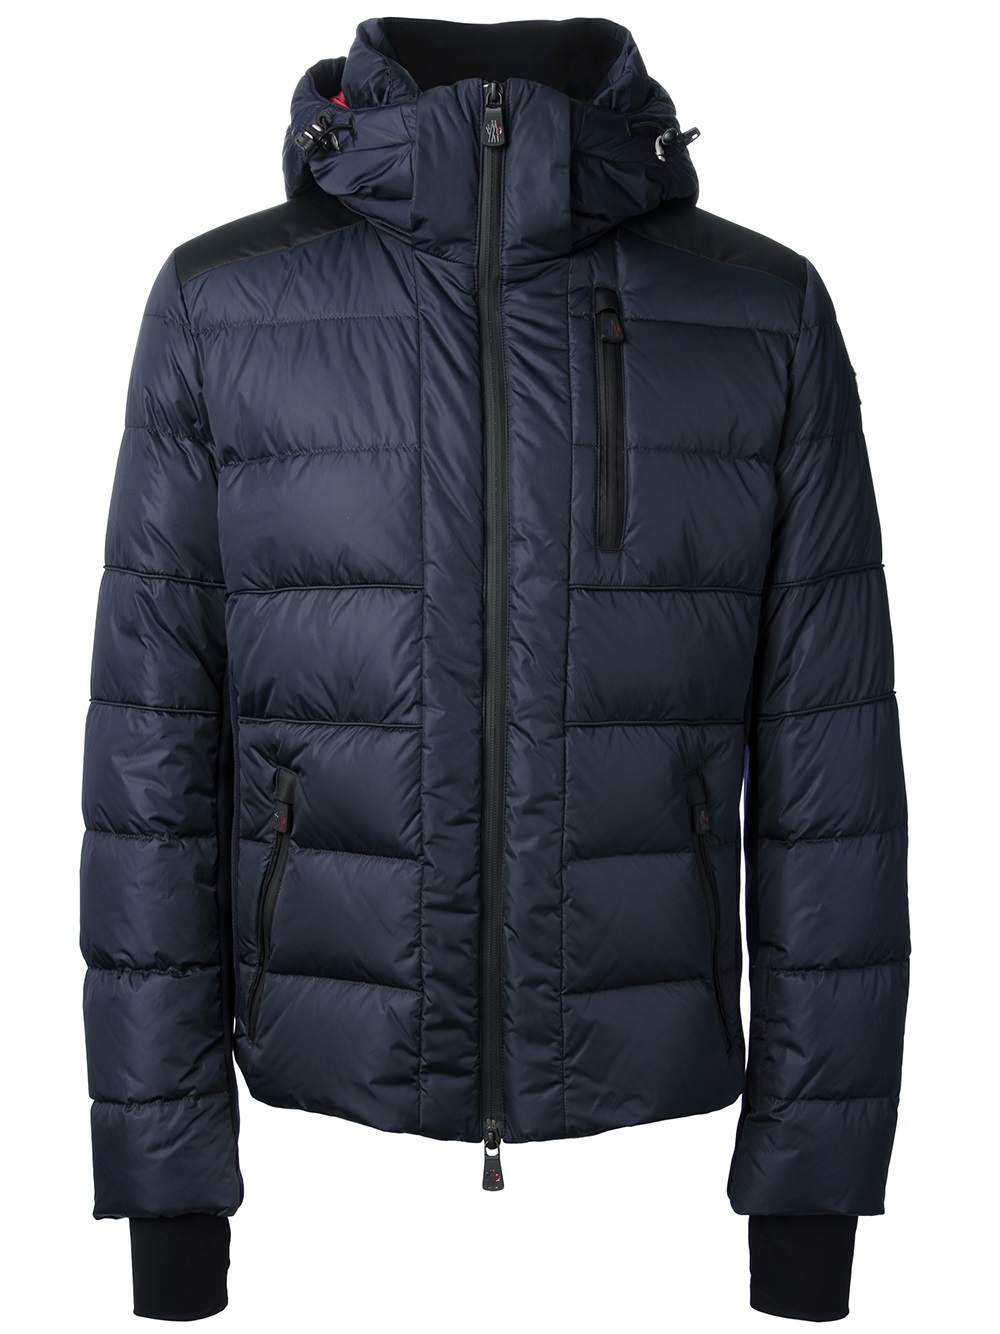 Lyst - Moncler Grenoble Soulare Padded Jacket in Black for Men